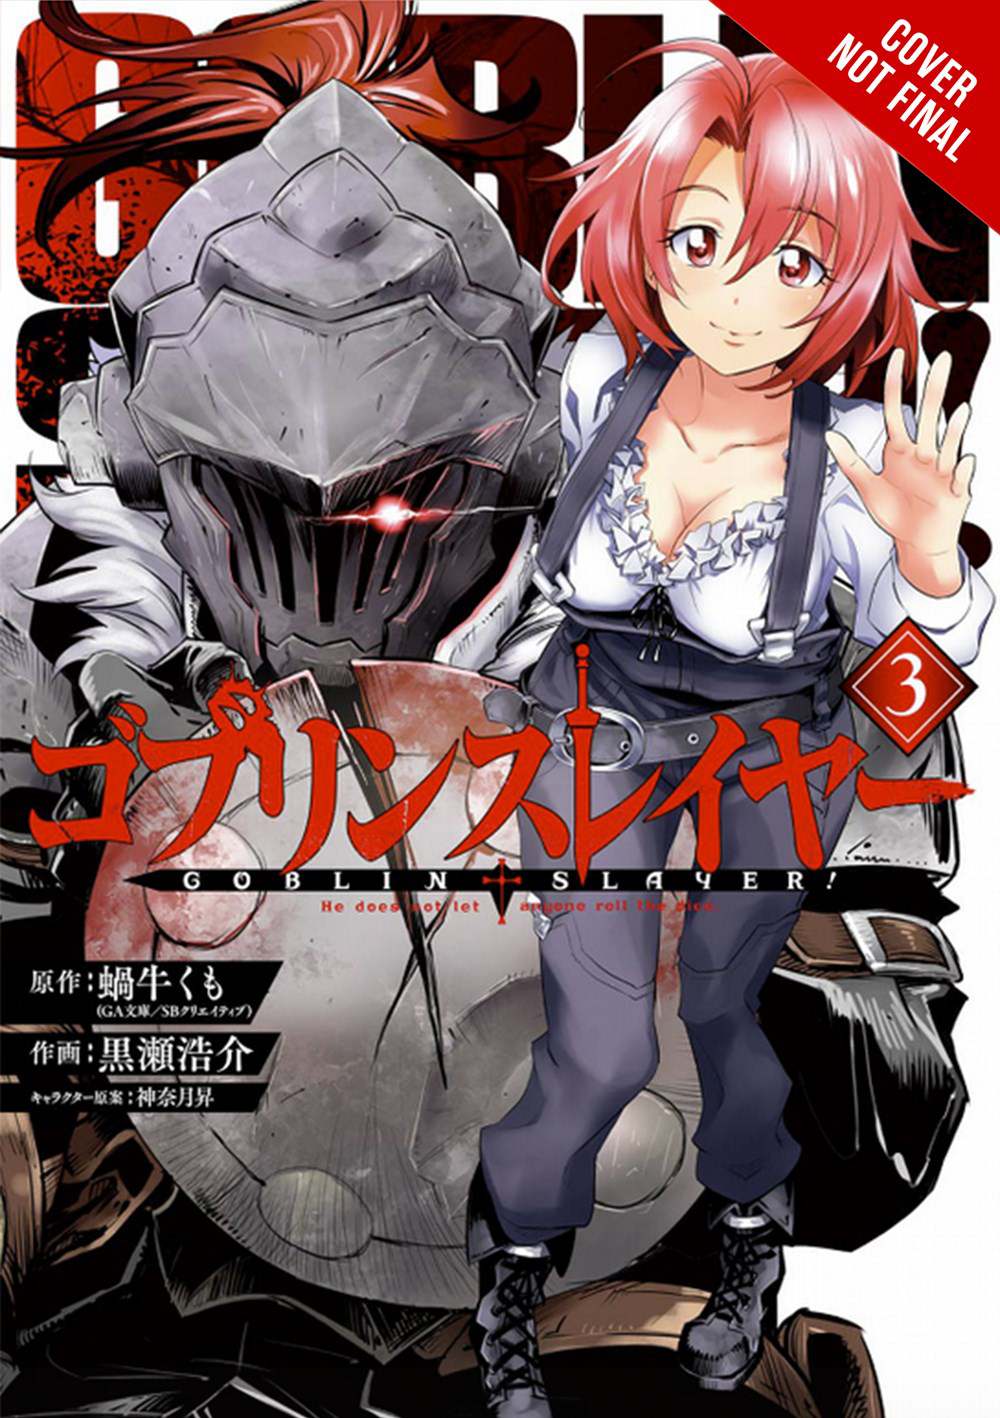 Goblin Slayer Manga Volume 3 (Mature)